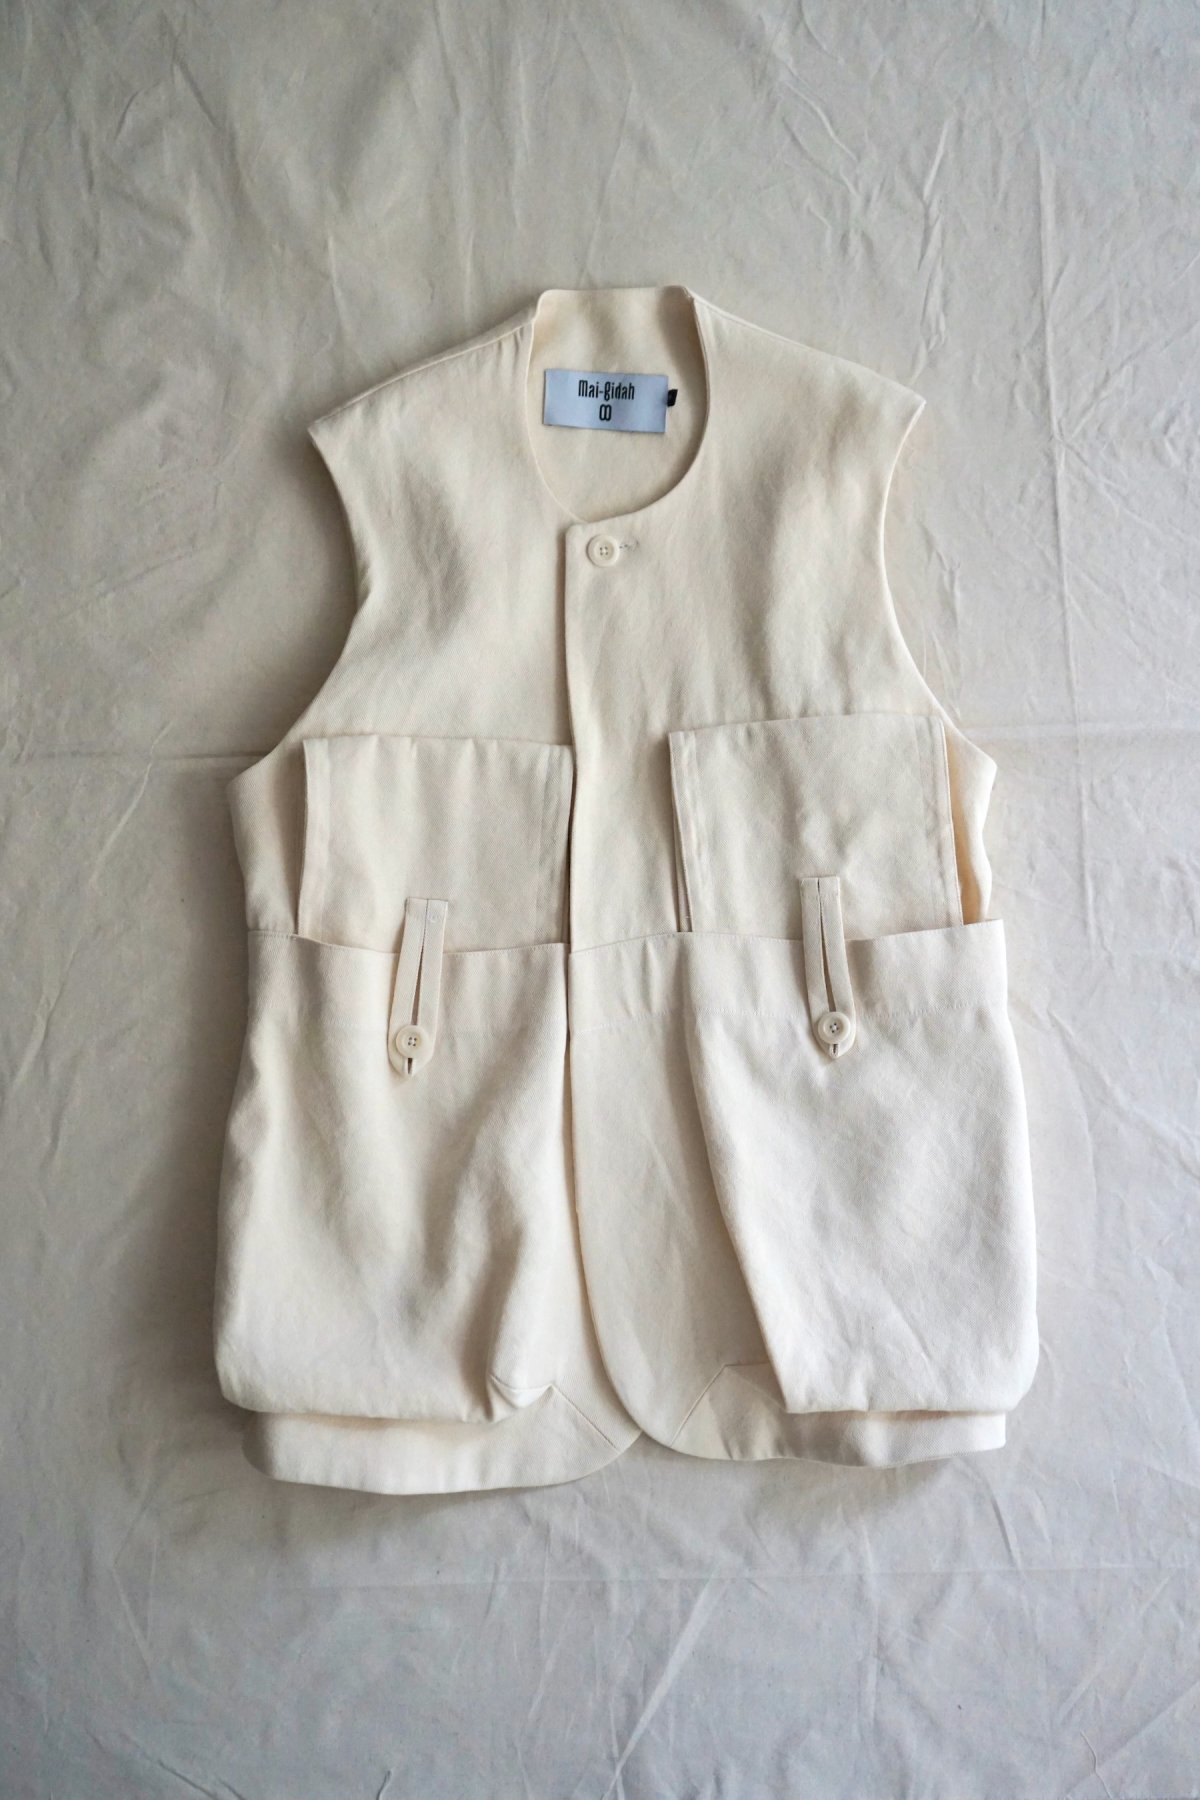 MAI GIDAH / Sleeveless Jacket with a-symmetrical balloon-pockets and belt / Cream